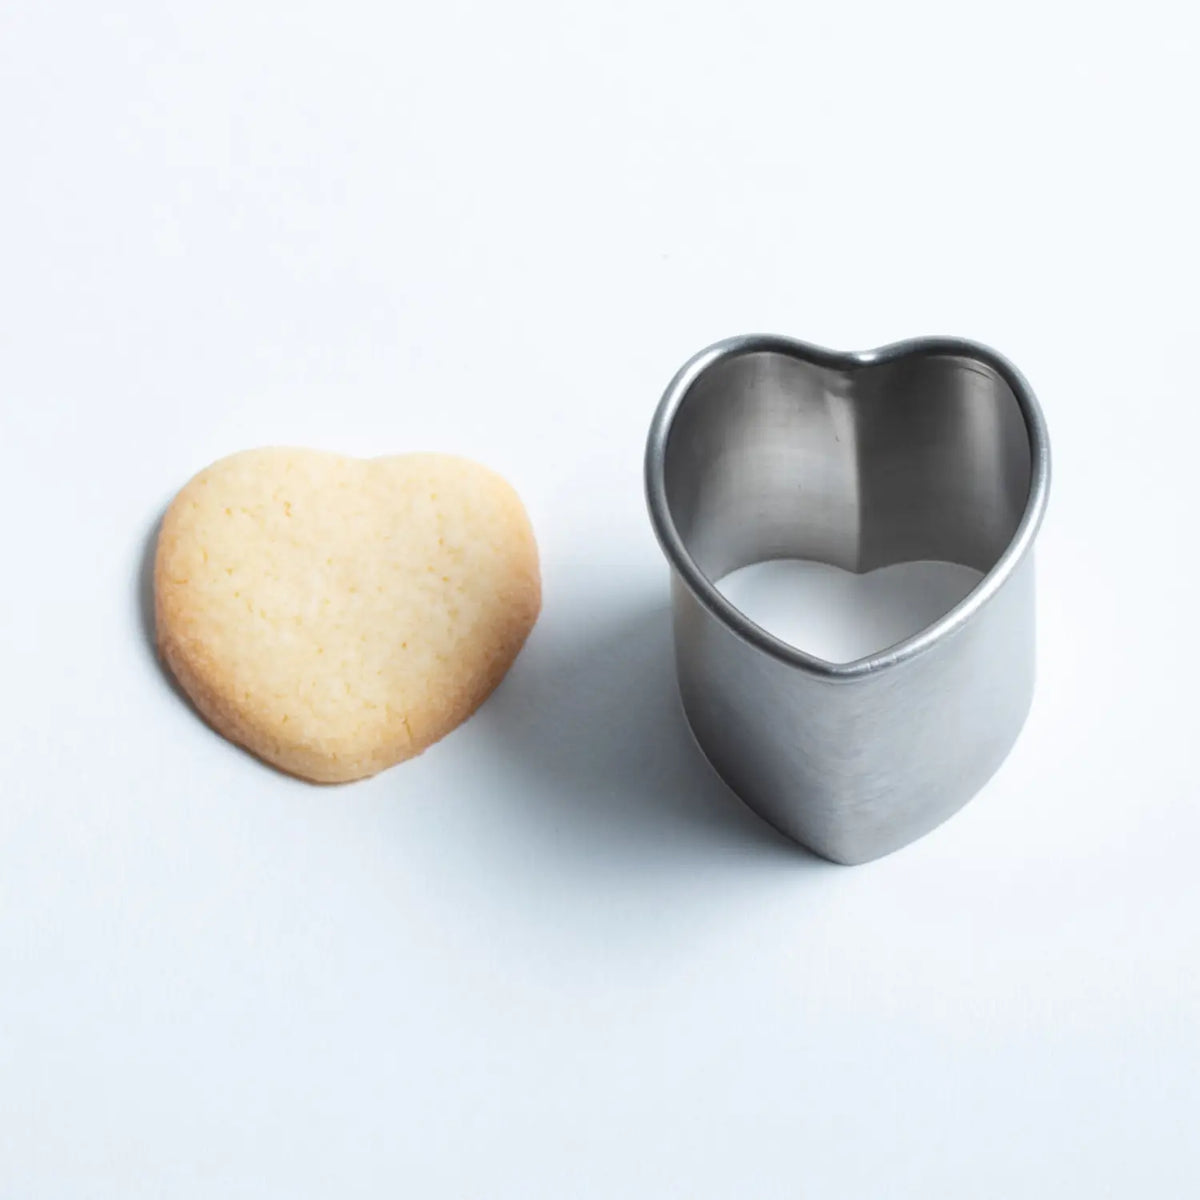 SUNCRAFT Patissiere Stainless Steel Heart Cookie Cutter